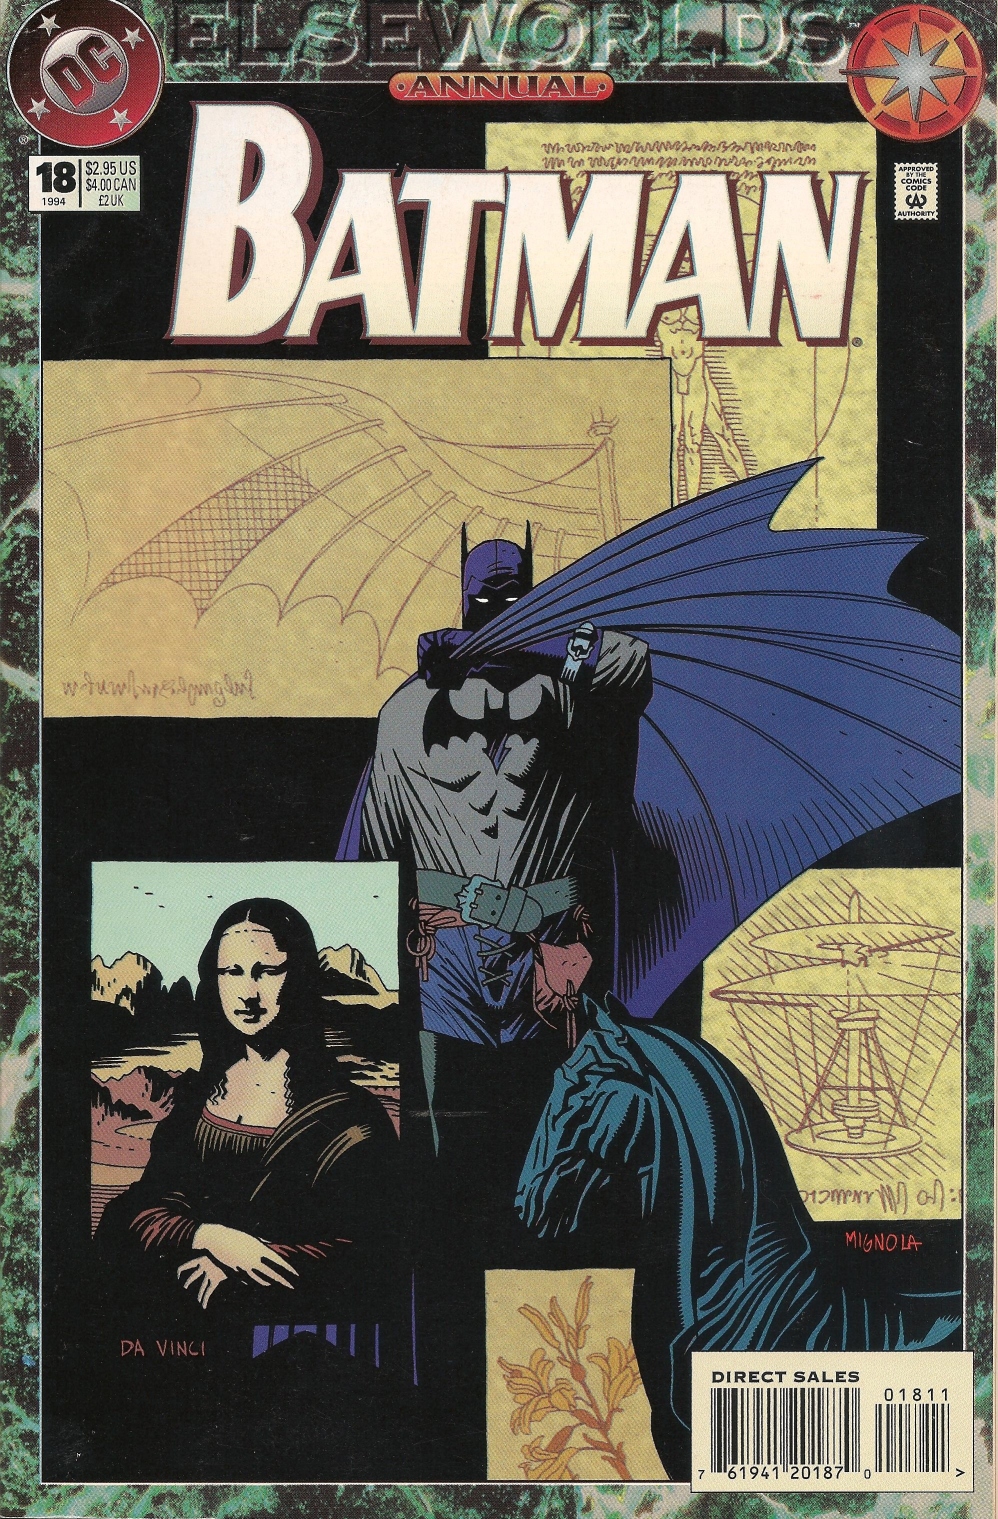 Бэтмен 1994. Батман» (1994). Elseworlds: Batman Volume 2. Batman 1994 s1 e1 (partie 4). Batman 18